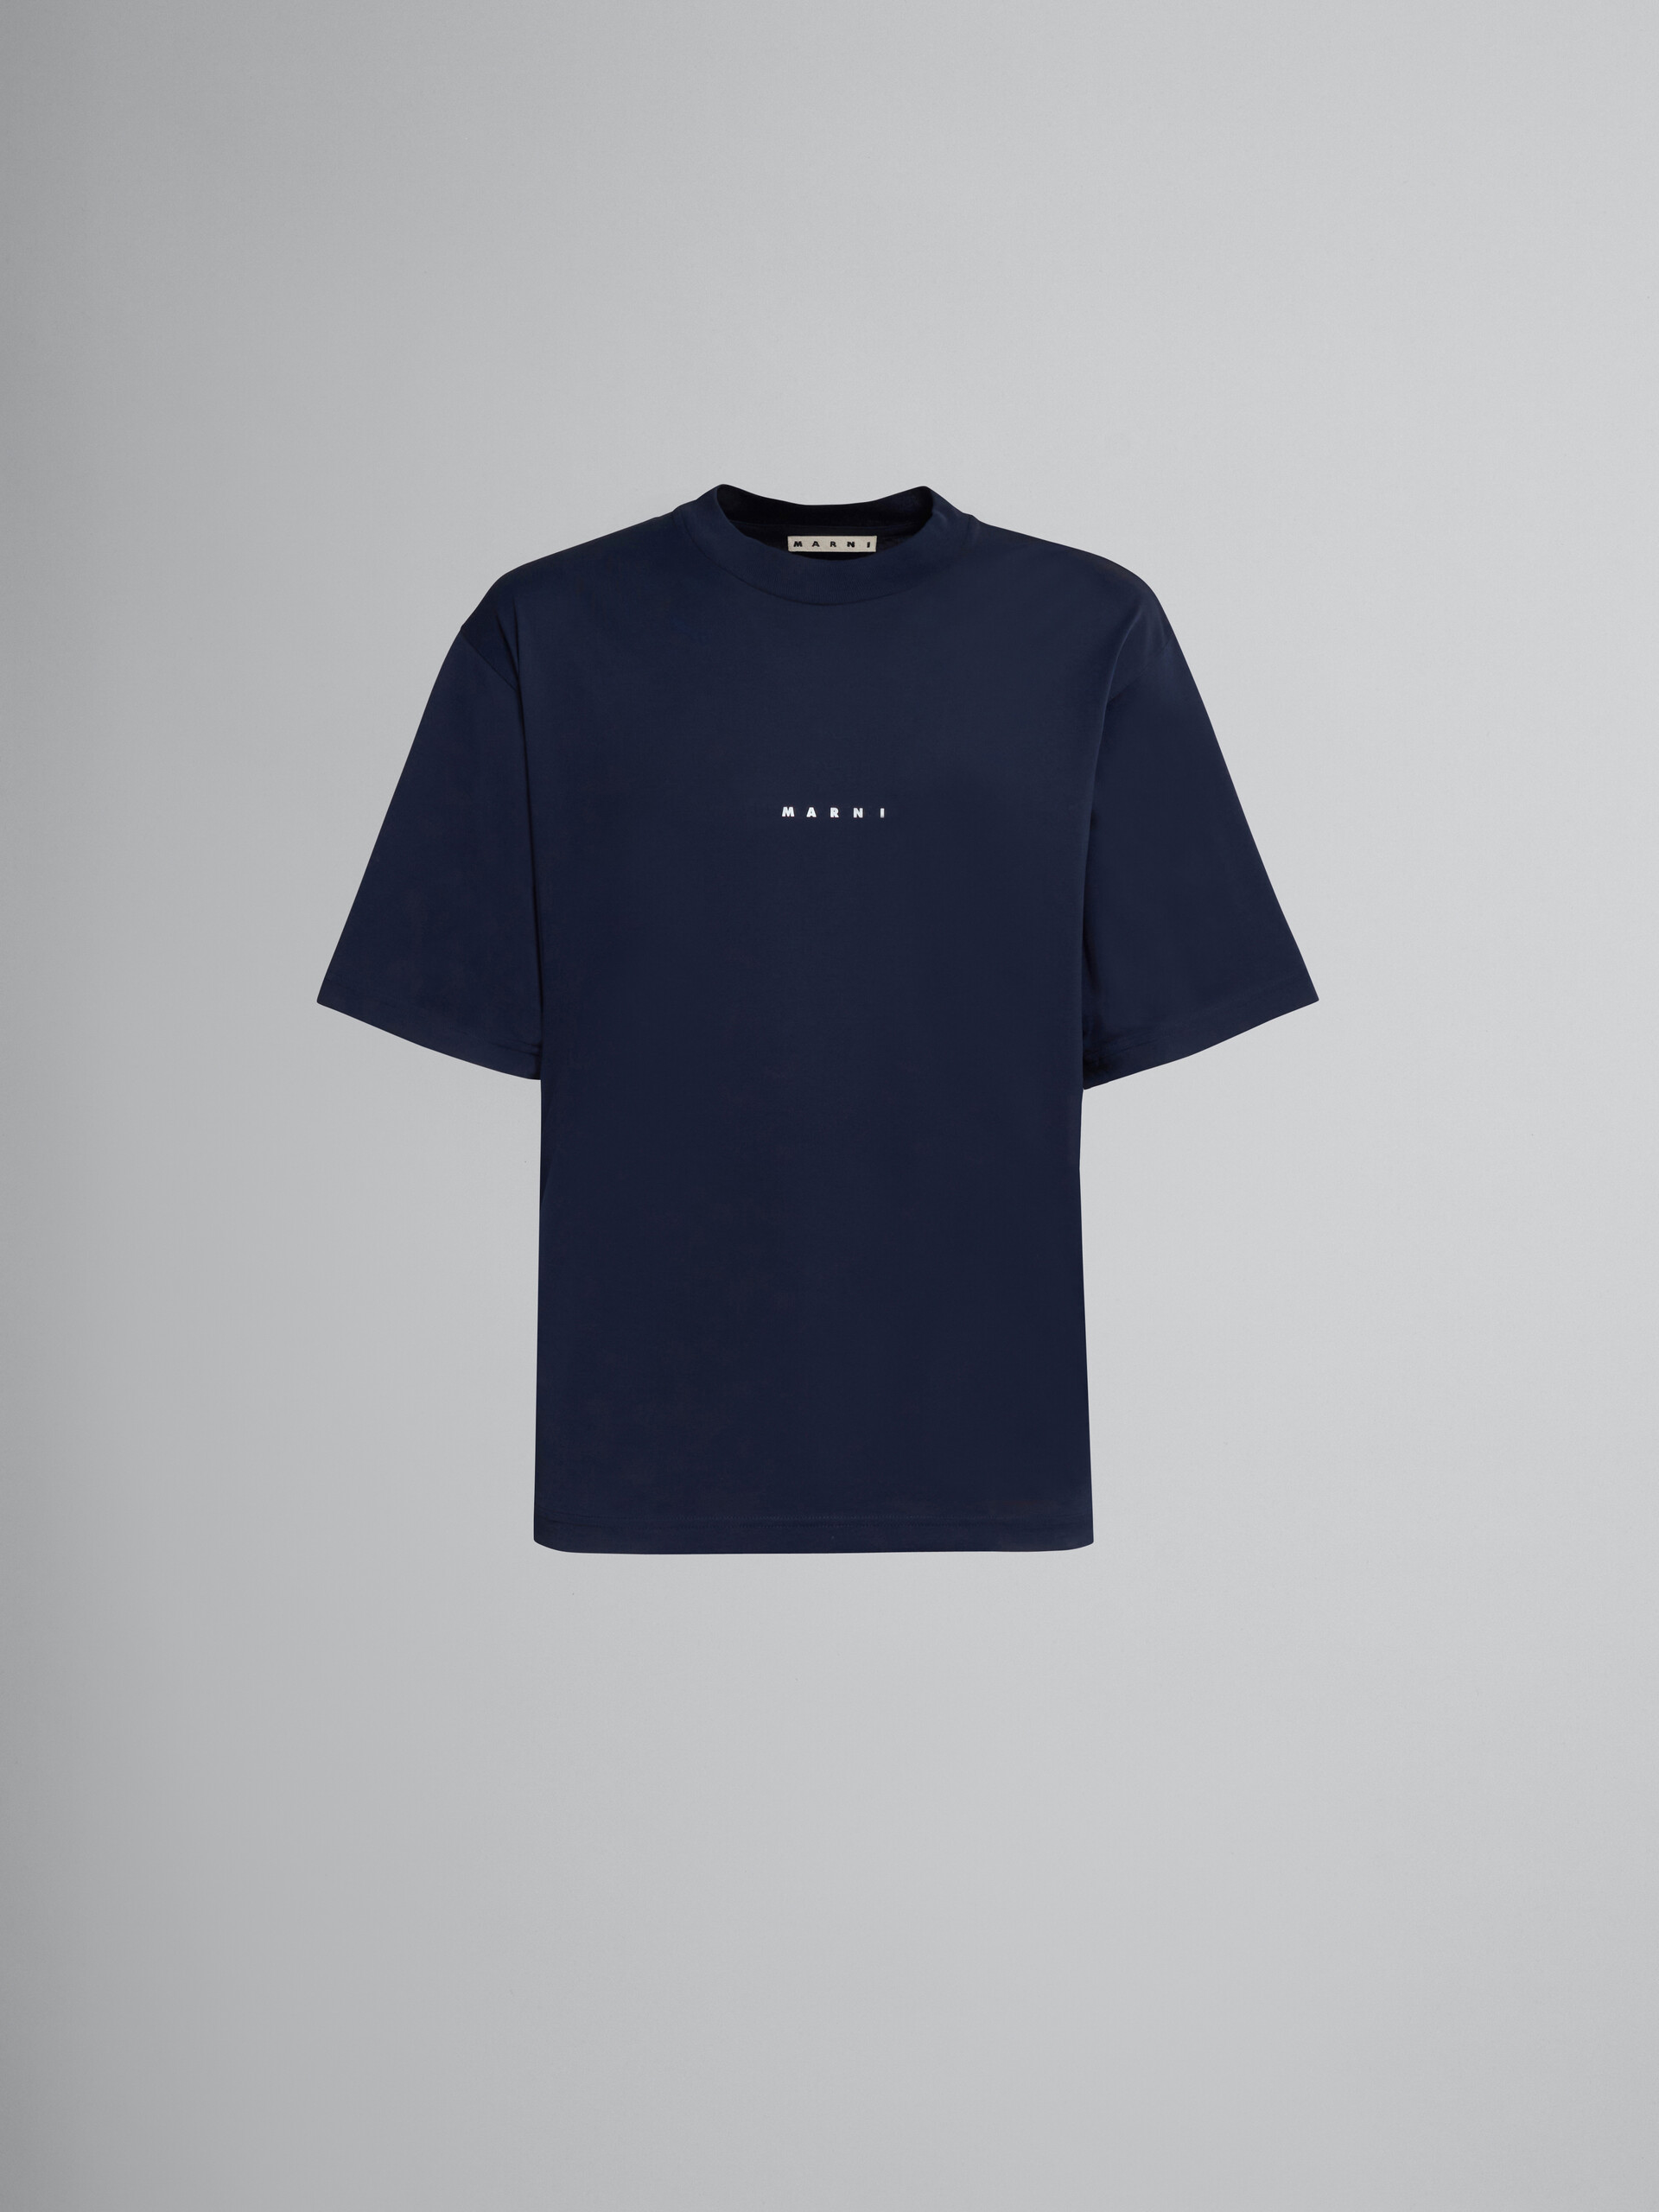 Blue black jersey logo print T-shirt - T-shirts - Image 1